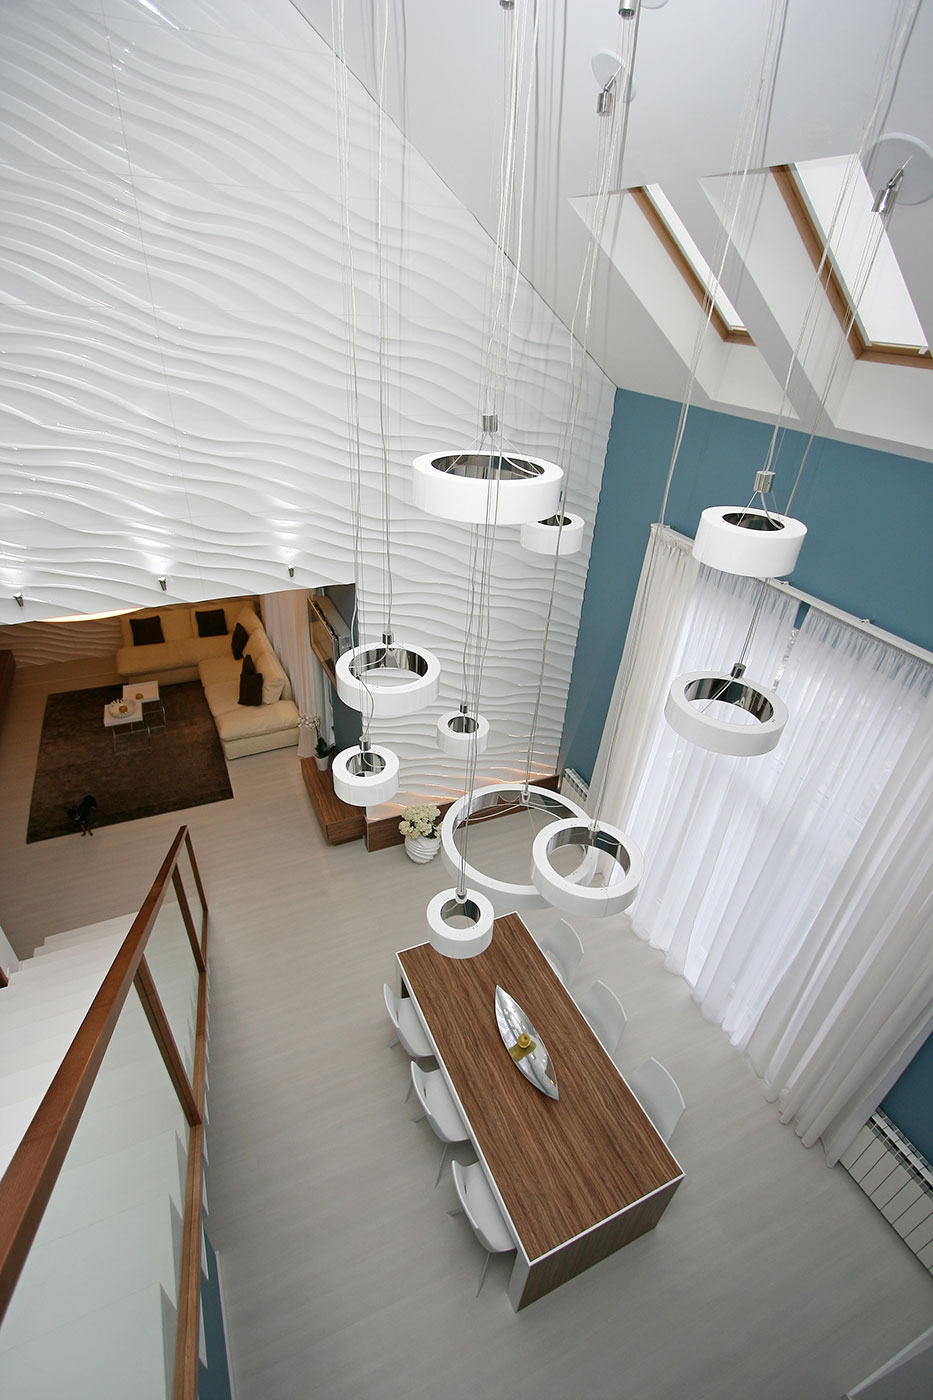 Interior Design By SVOYA Studio From Ukraine